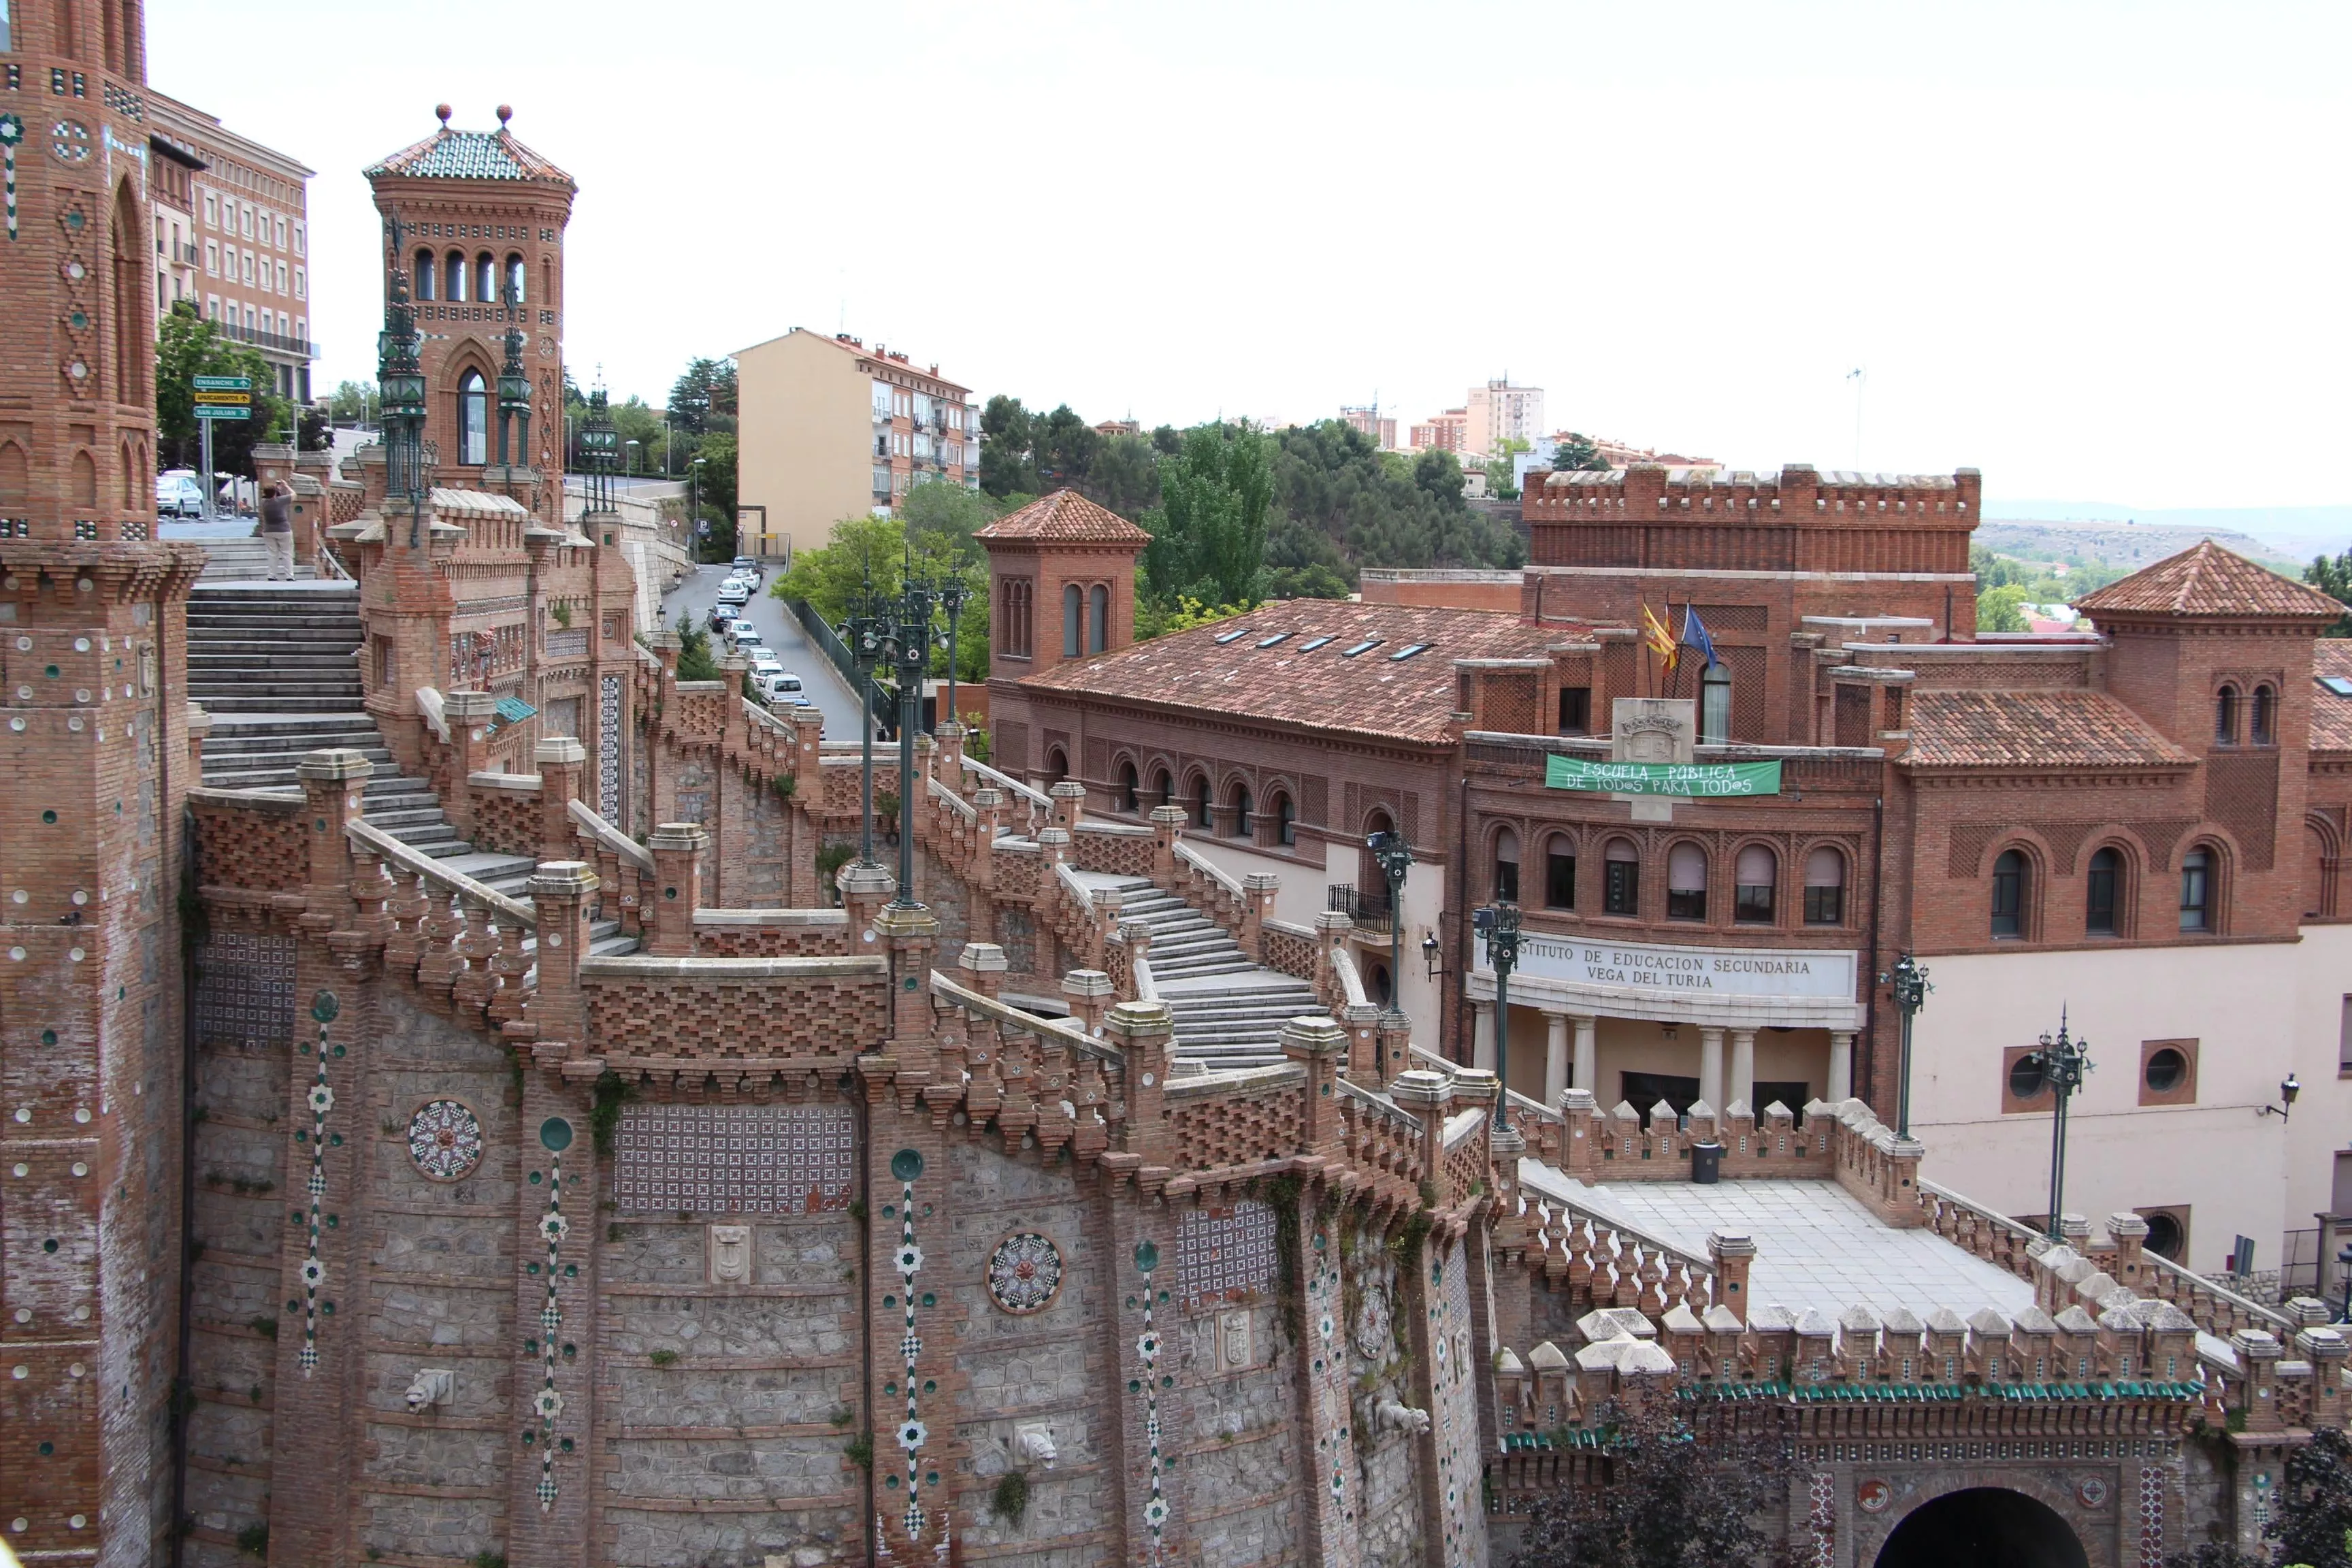 Escalinata del Ovalo in Spain, Europe | Architecture - Rated 3.6